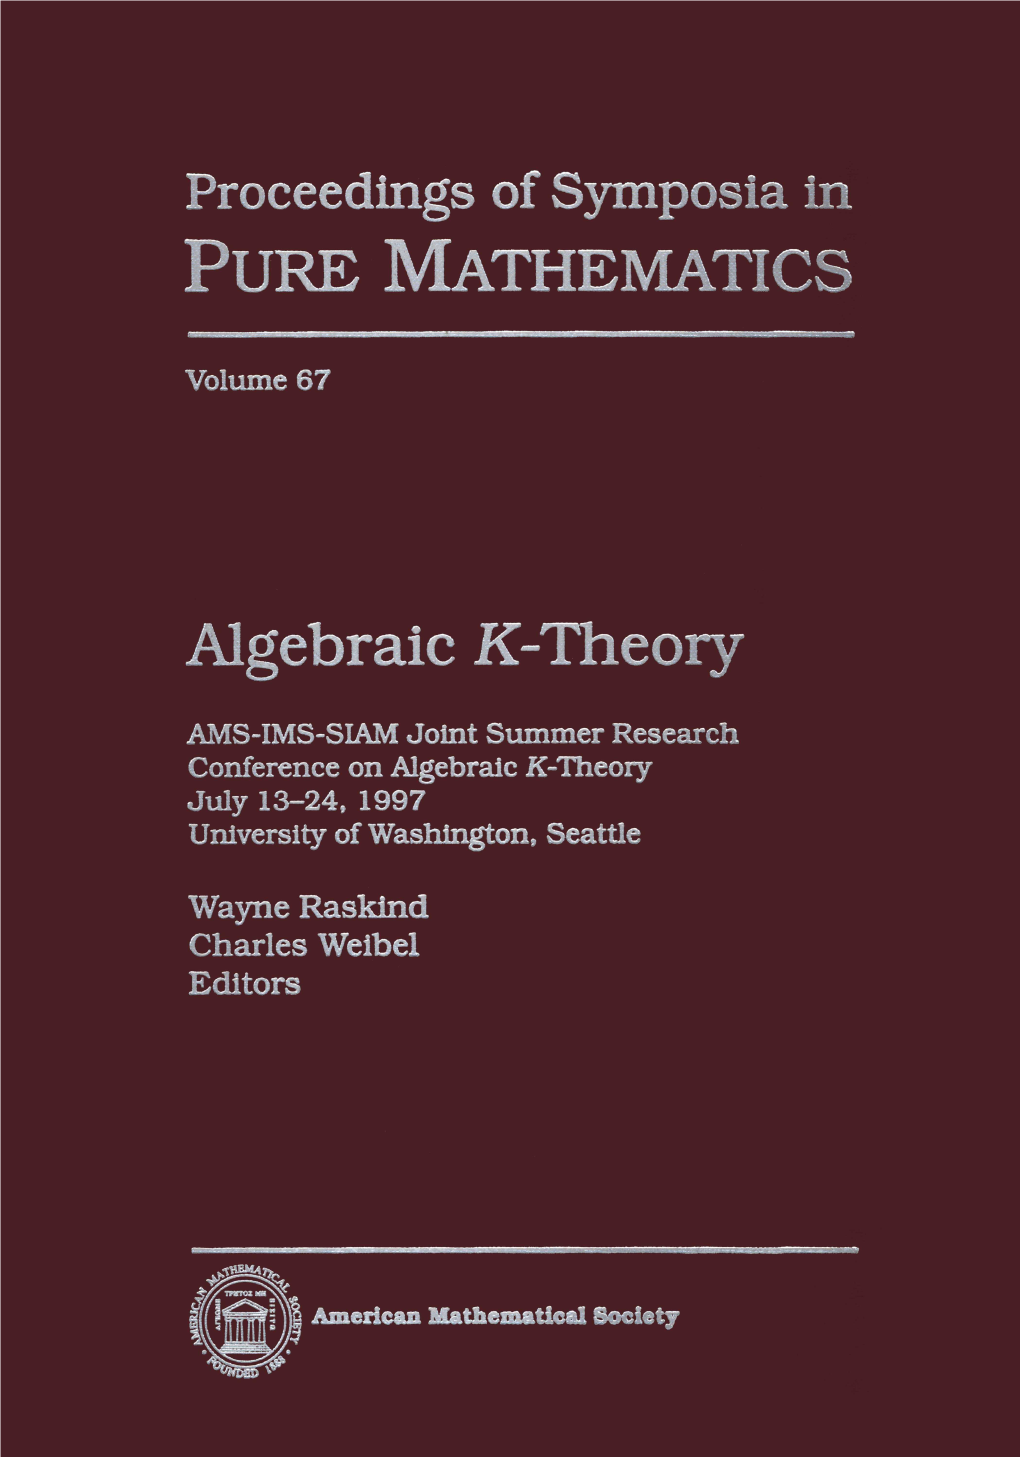 Algebraic K-Theory (University of Washington, Seattle, 1997) 66 Robert S